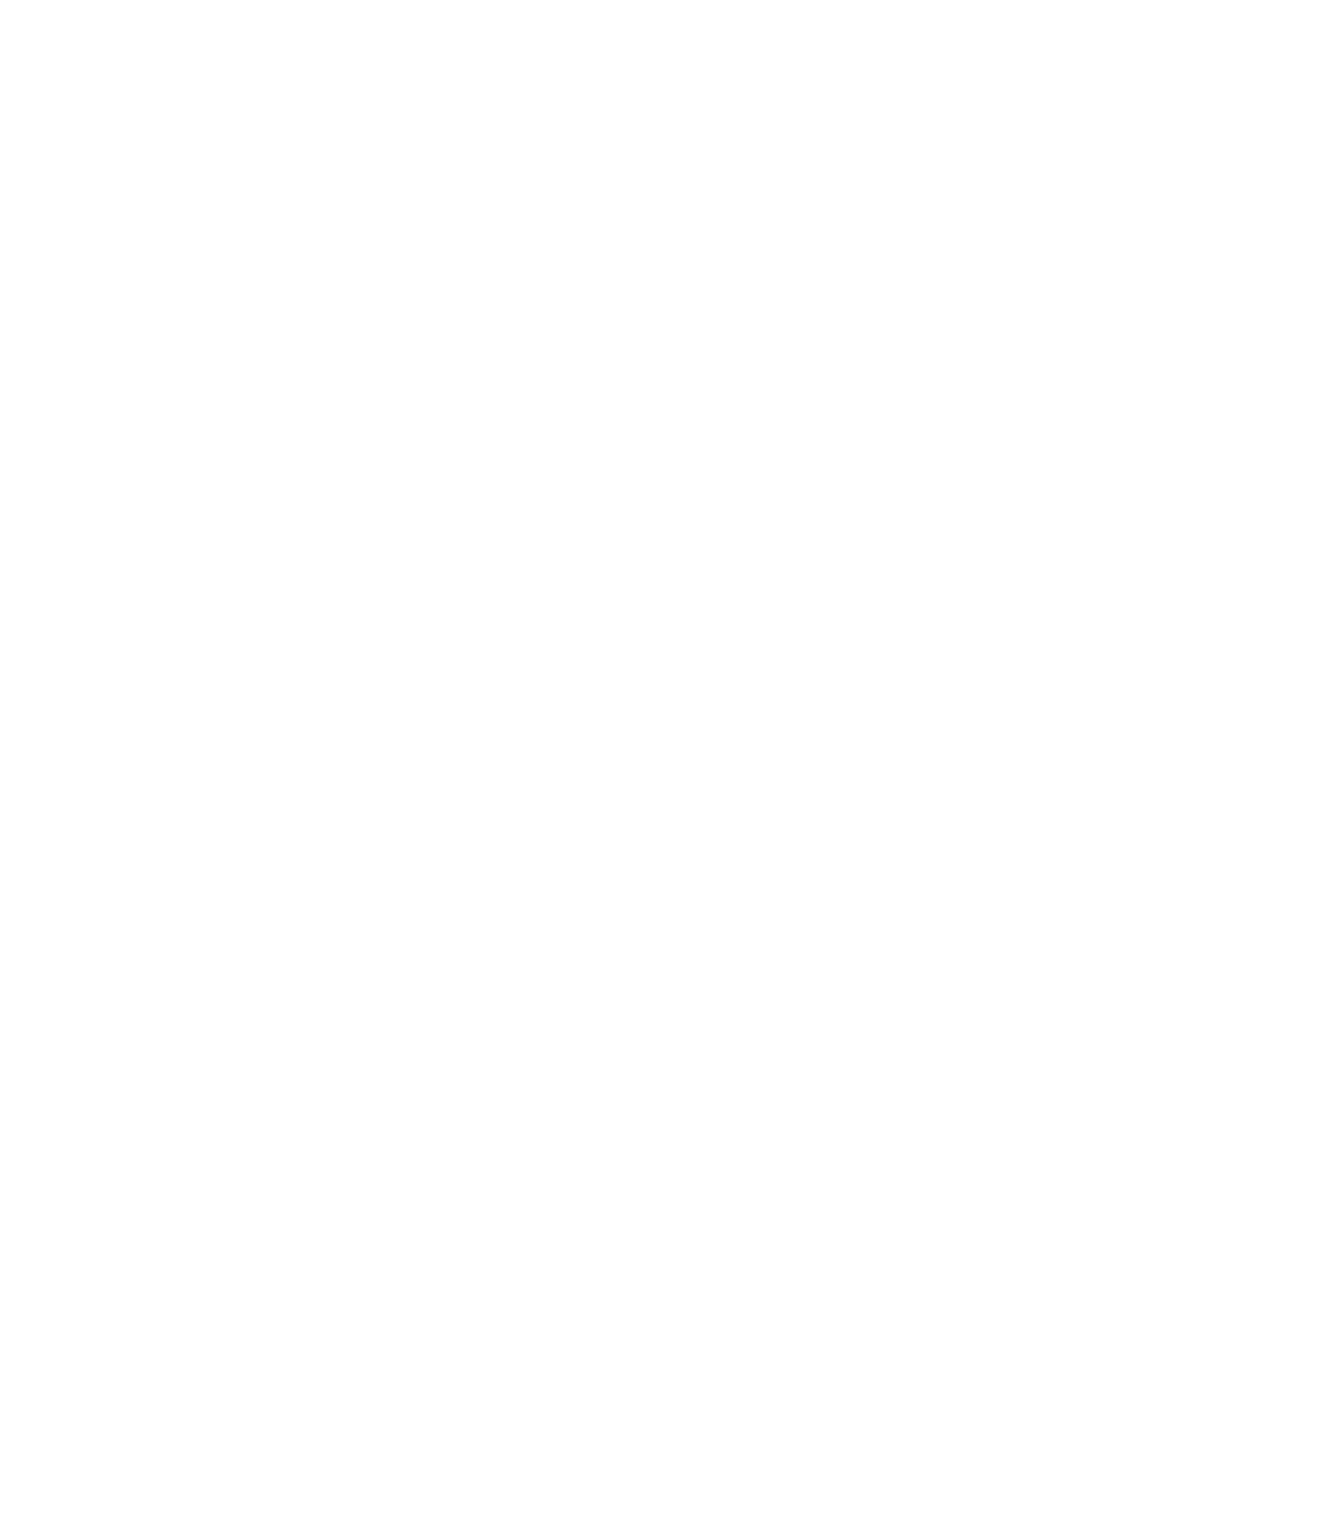 Alliance Resource Partners logo for dark backgrounds (transparent PNG)